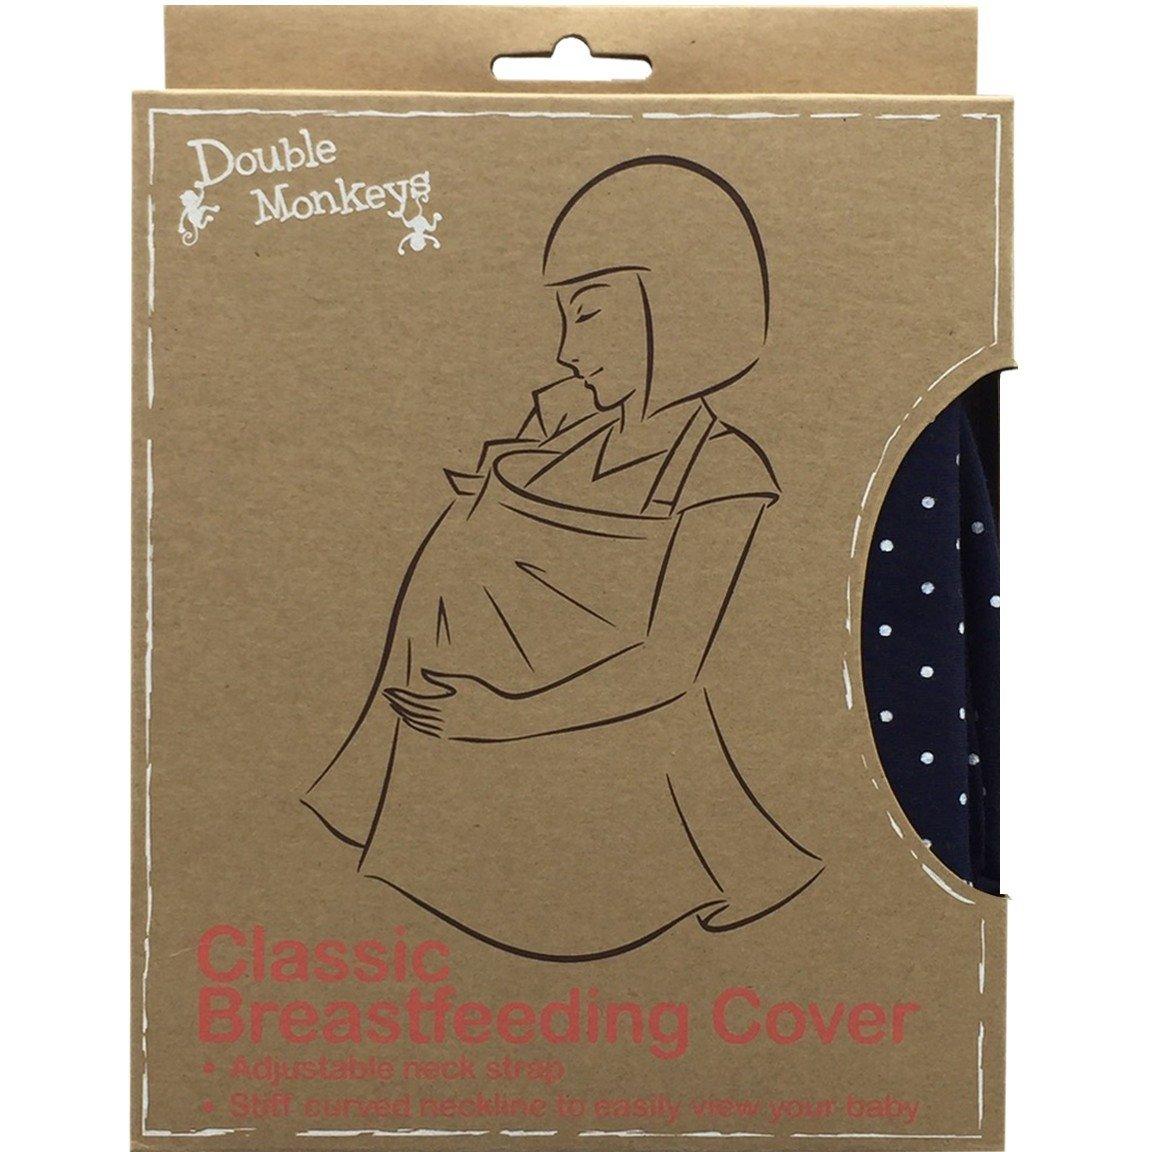 Double Monkeys ผ้าคลุม ให้นมบุตร Classic Style Breastfeeding Cover (3 Colors)